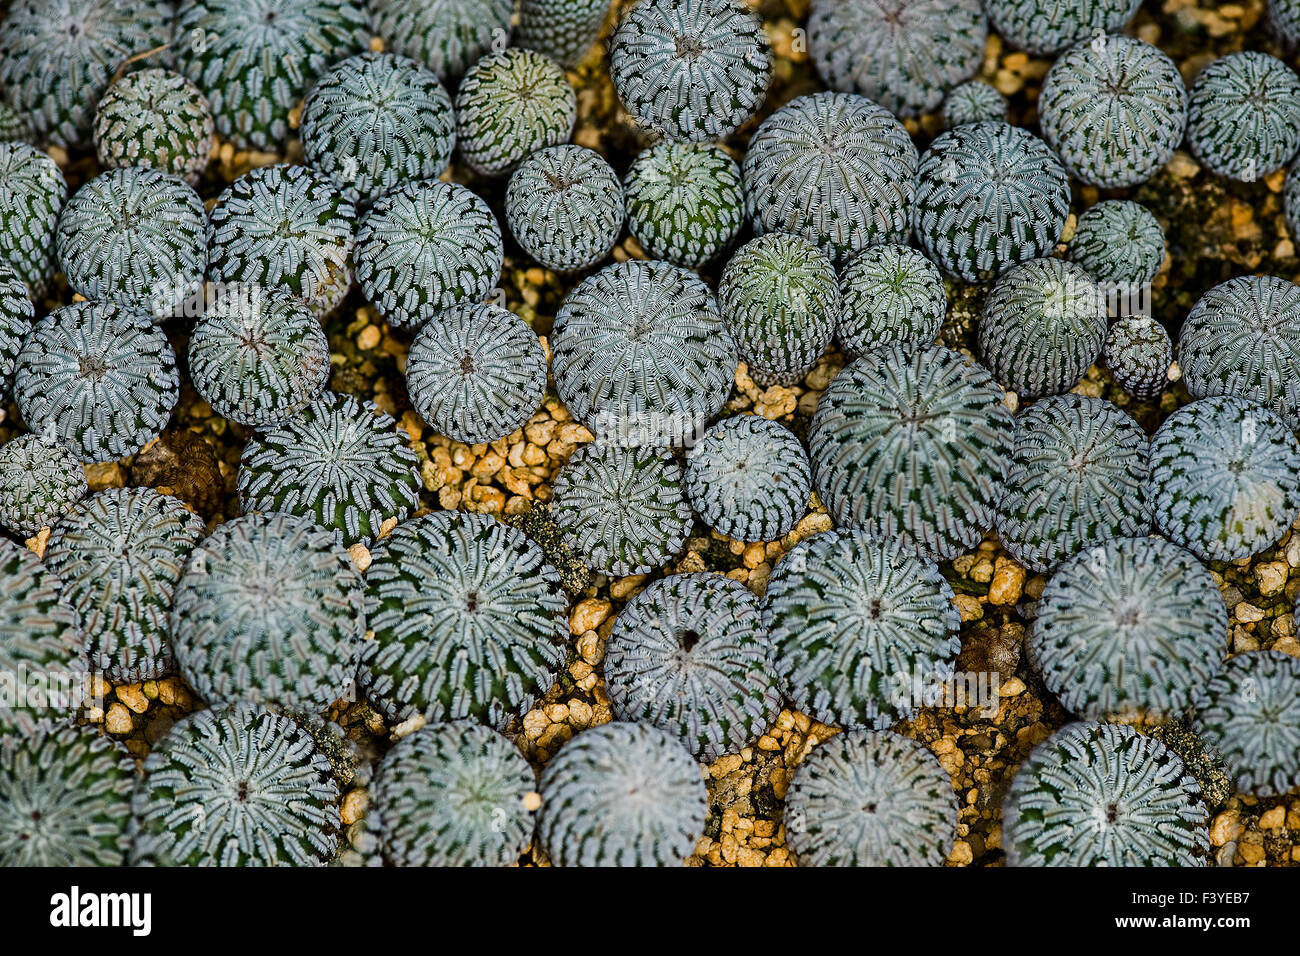 cactuses Stock Photo